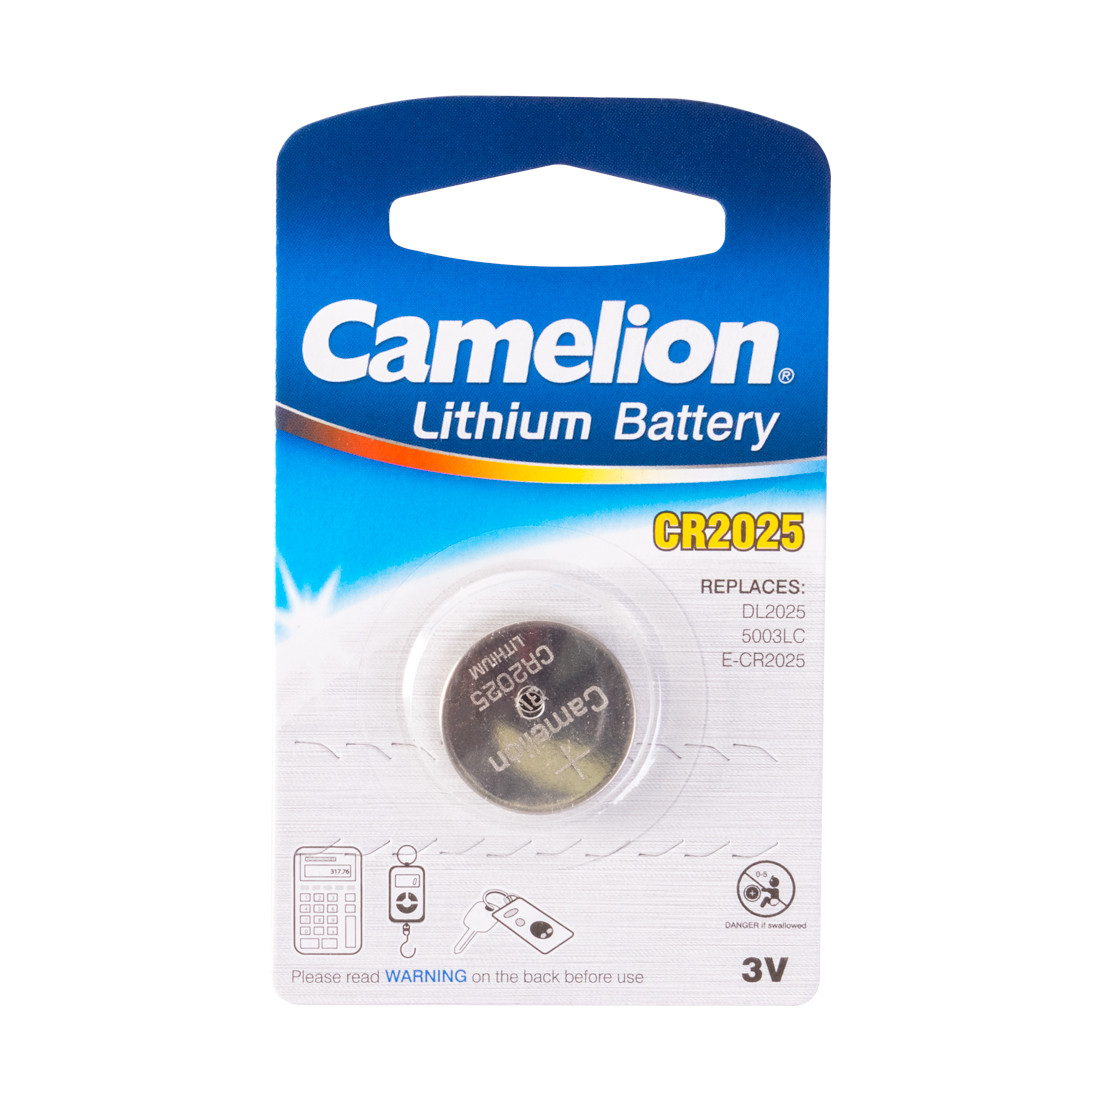 Camelion CR2025-BP1 Батарейка Lithium Battery, CR2025, 3V, 220 mAh, 1 шт.